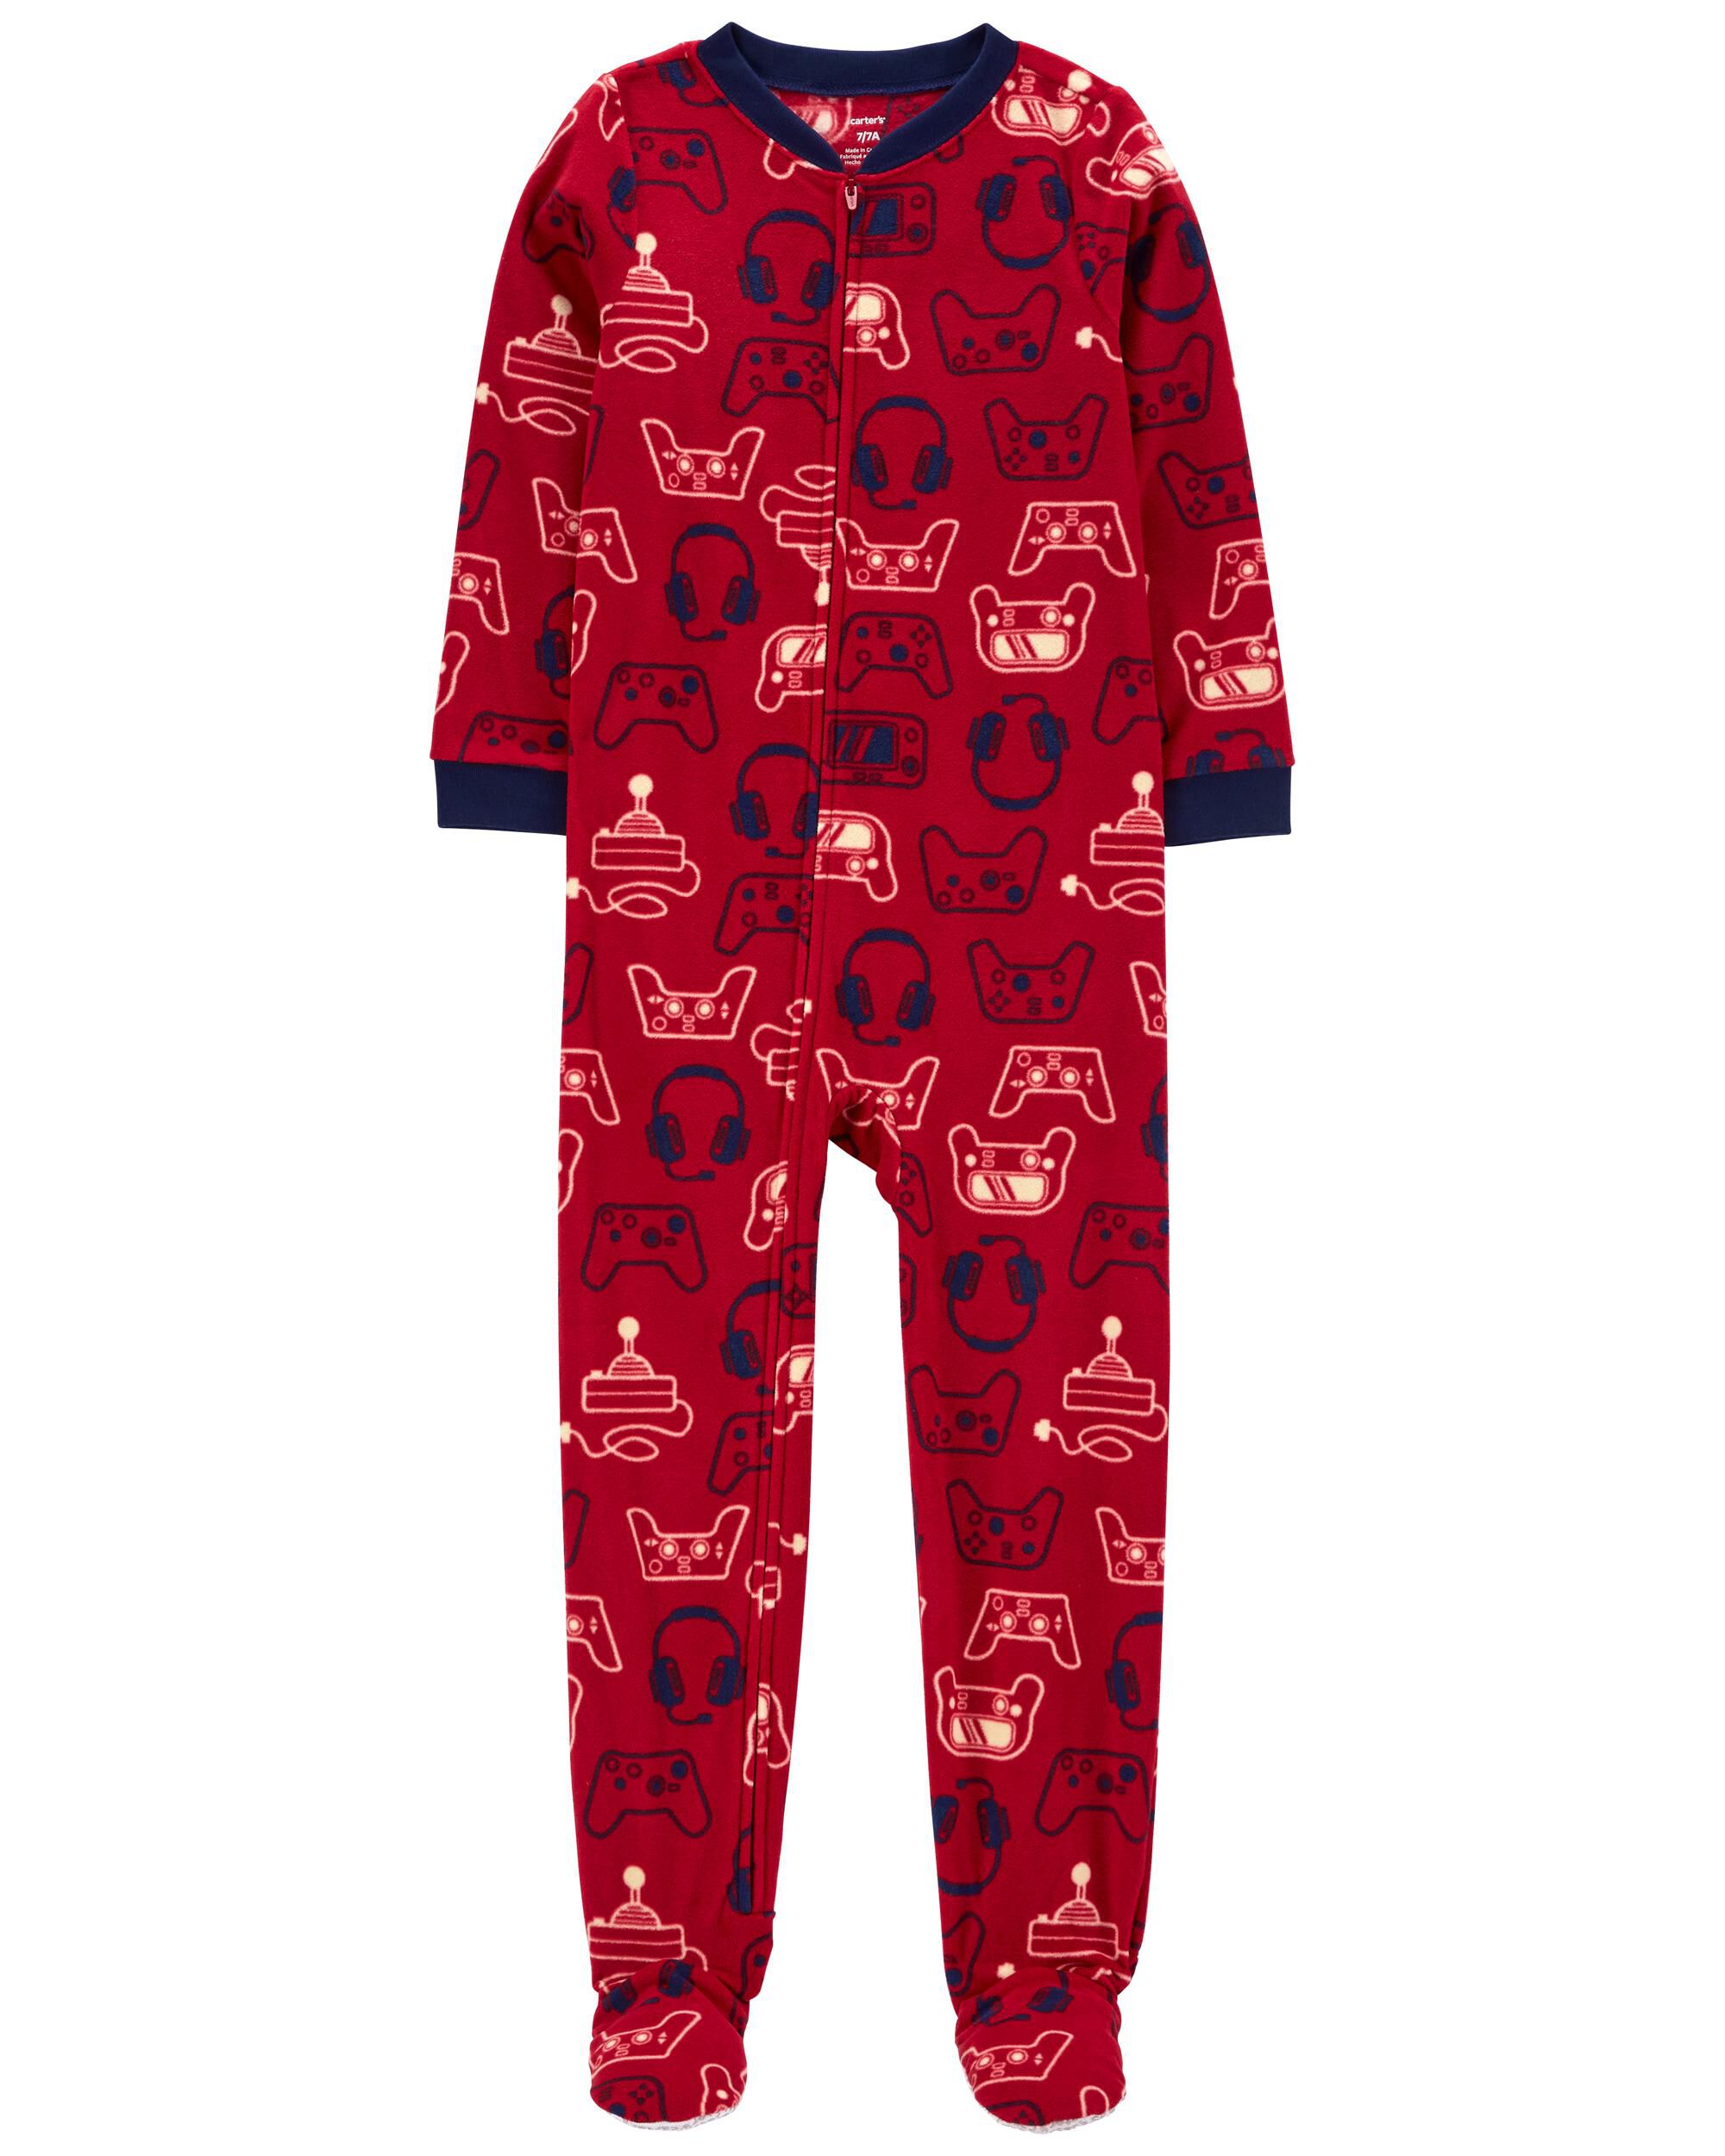 New Carter's Boys Bear Pajama set Snug Fit Long Sleeve Pants Red Black 